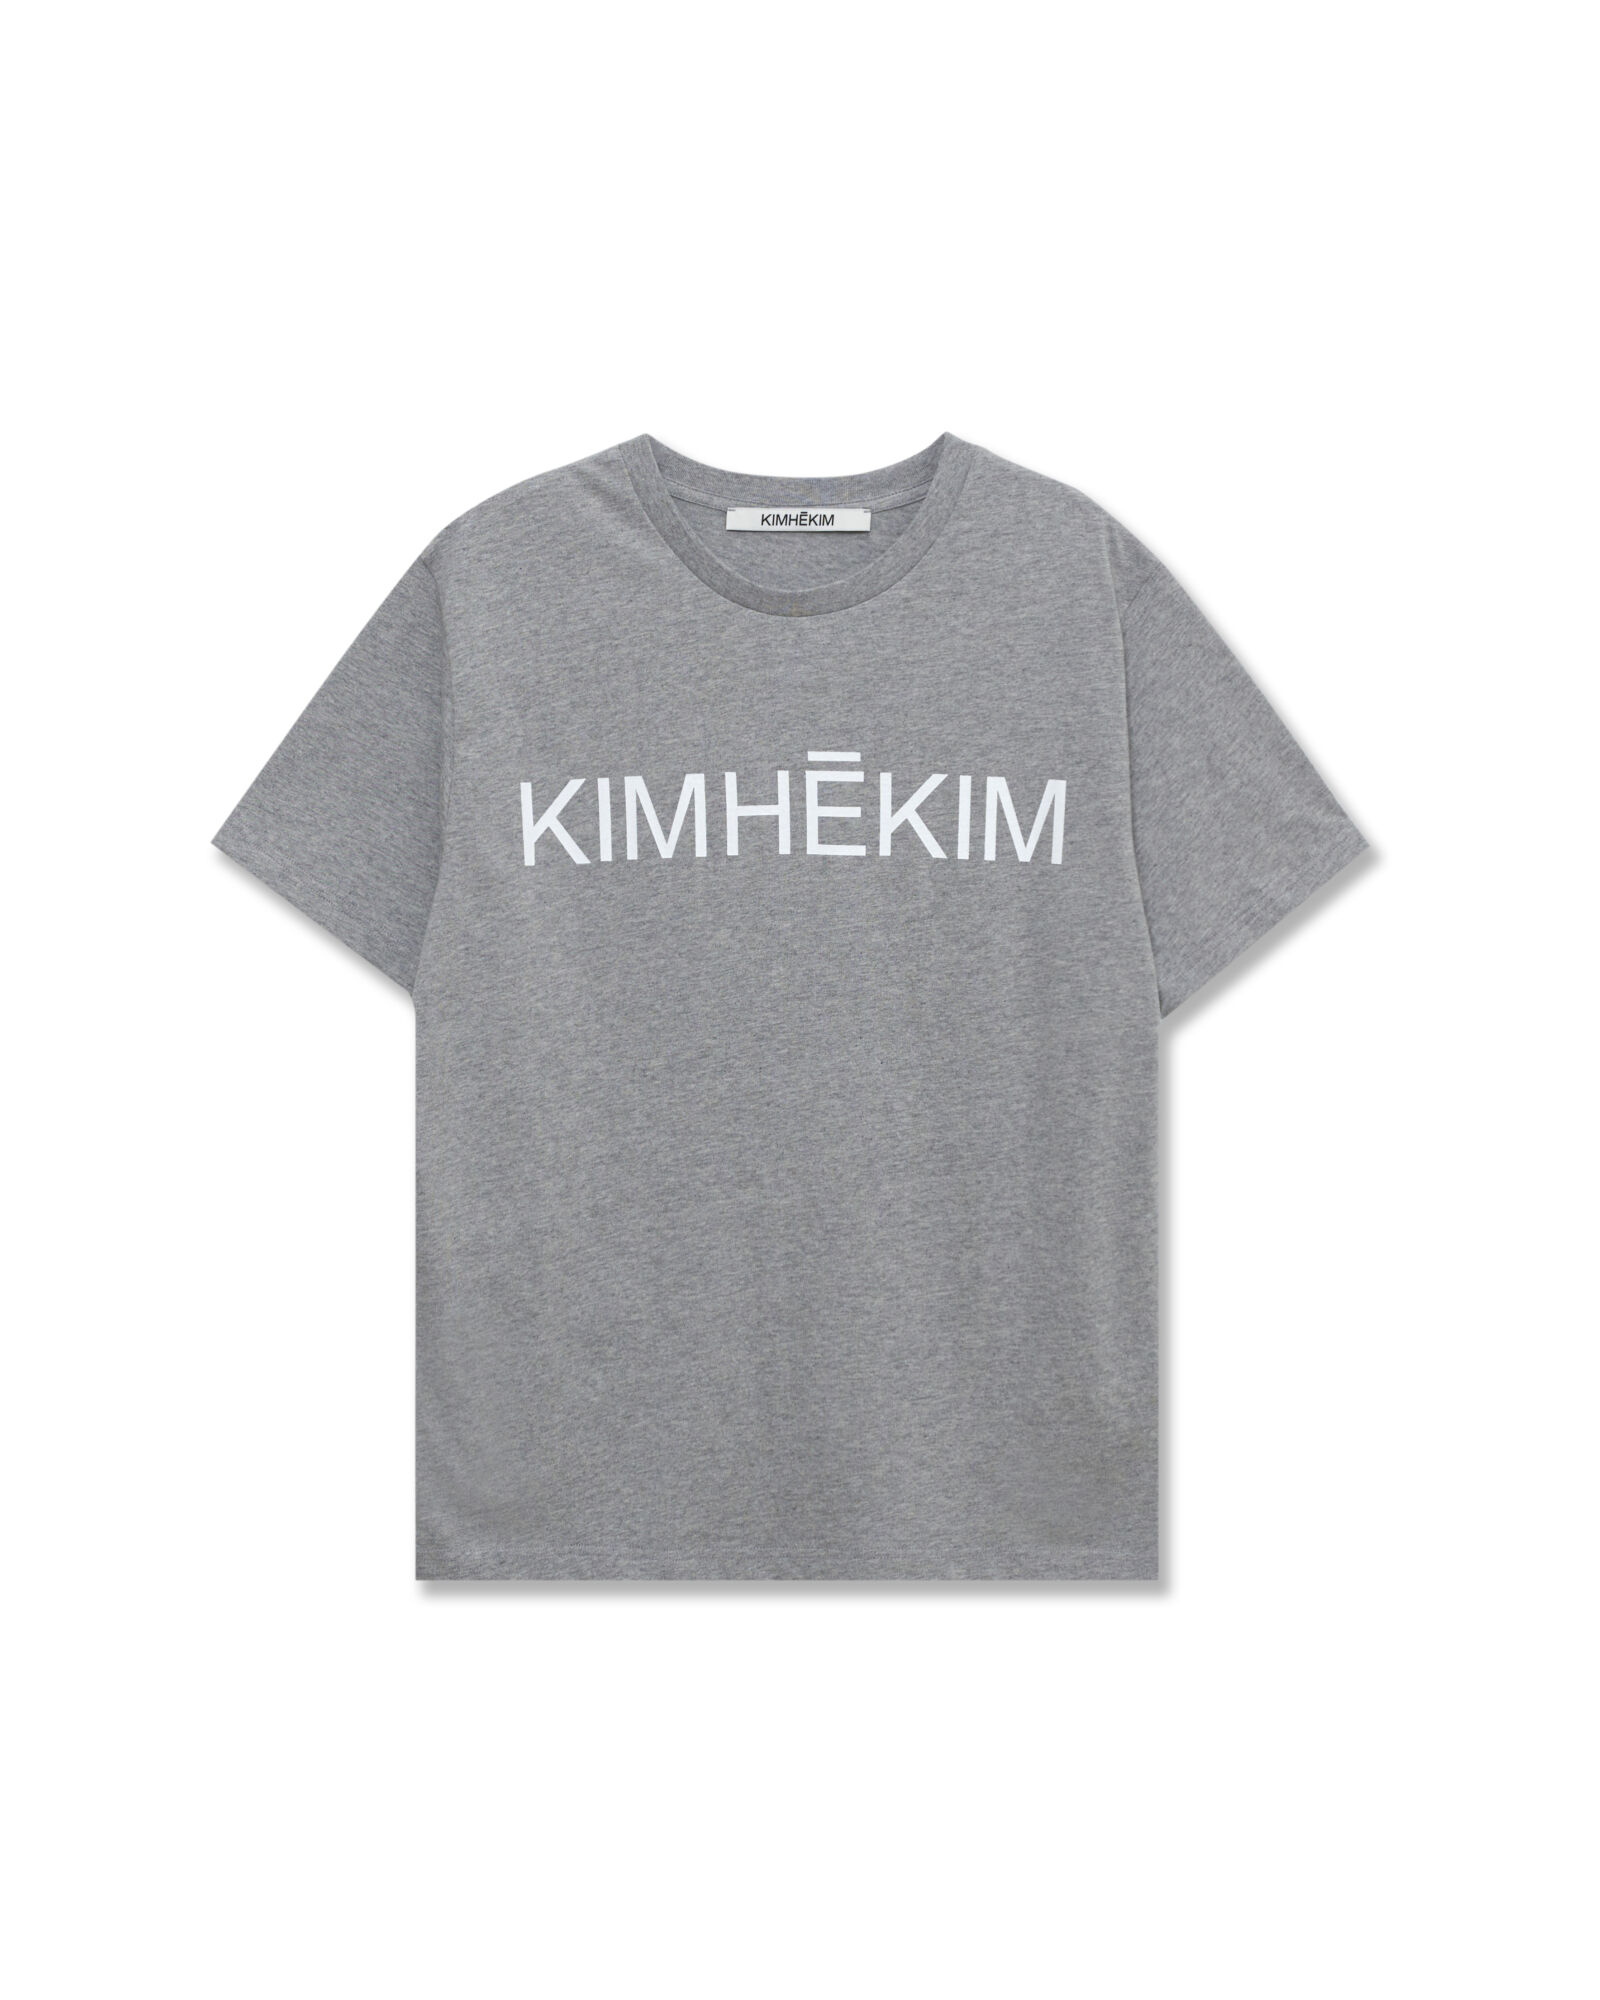 Kimhekim T-Shirt (Grey) - Kimhekim